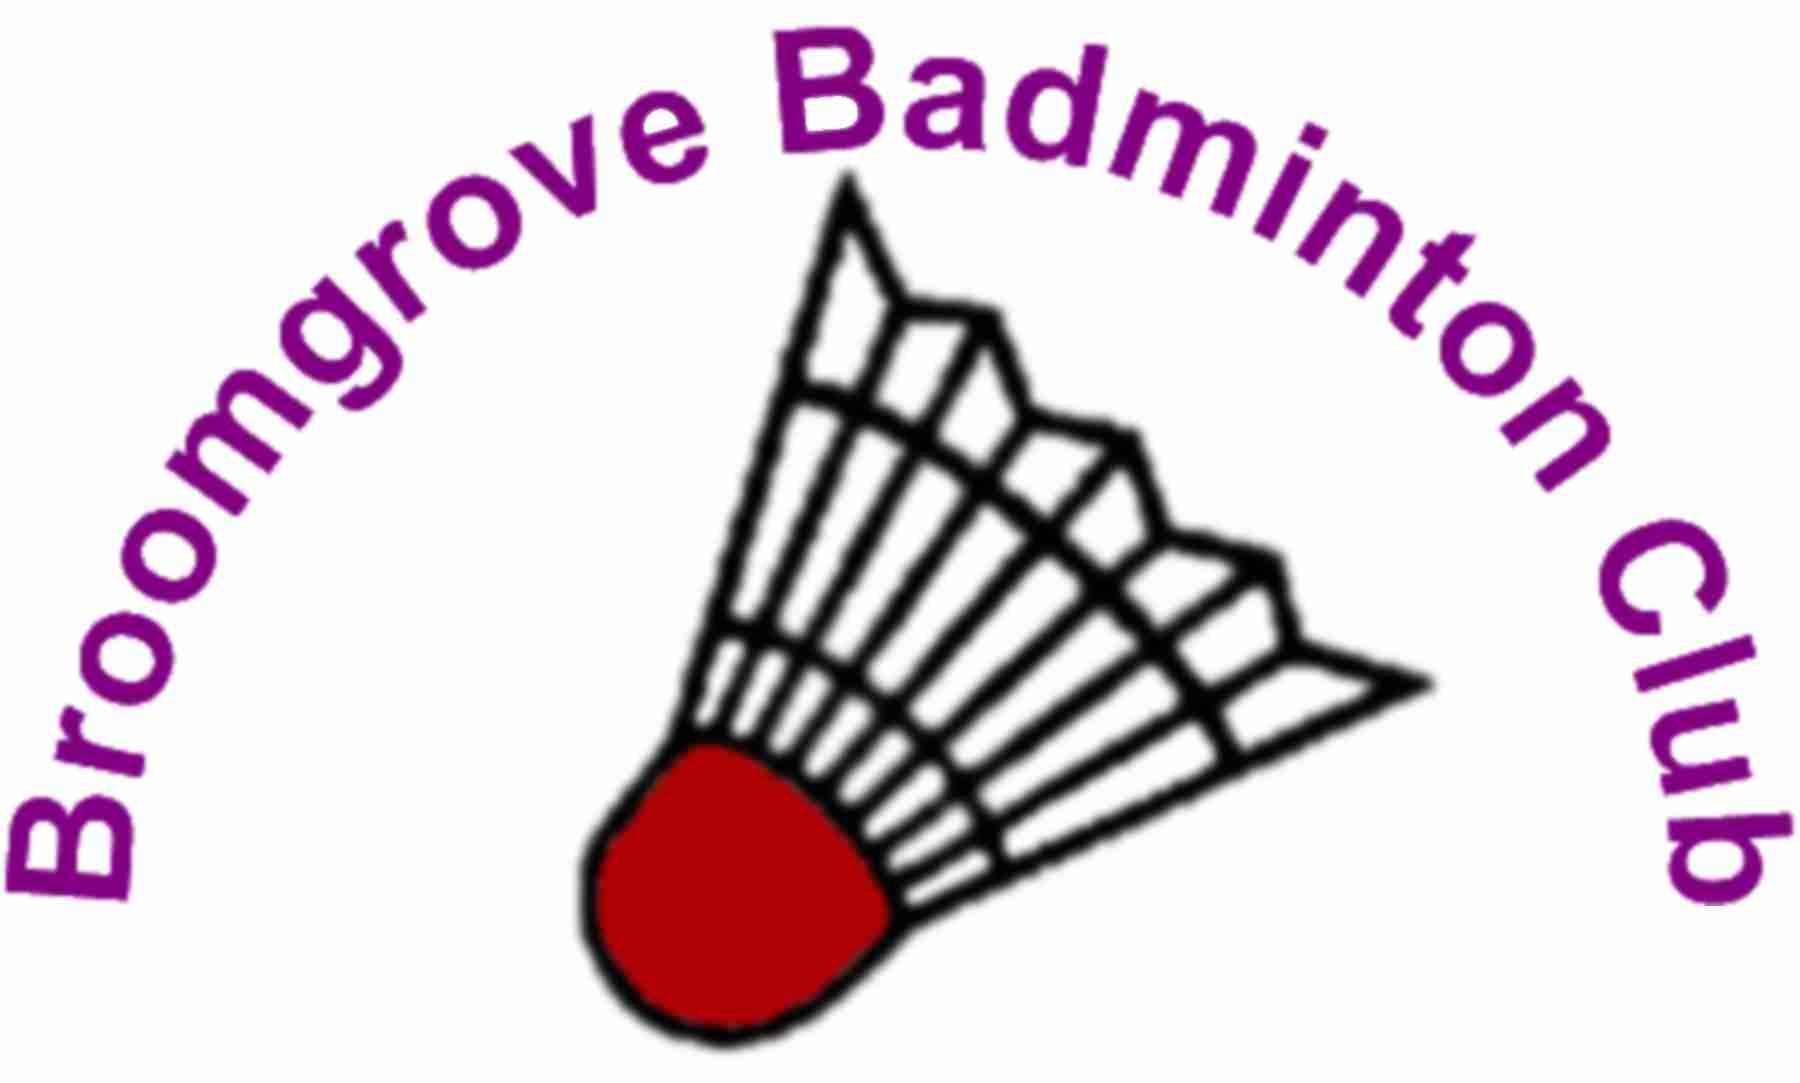 New badminton logo and website colour | Broomgrove Badminton Club